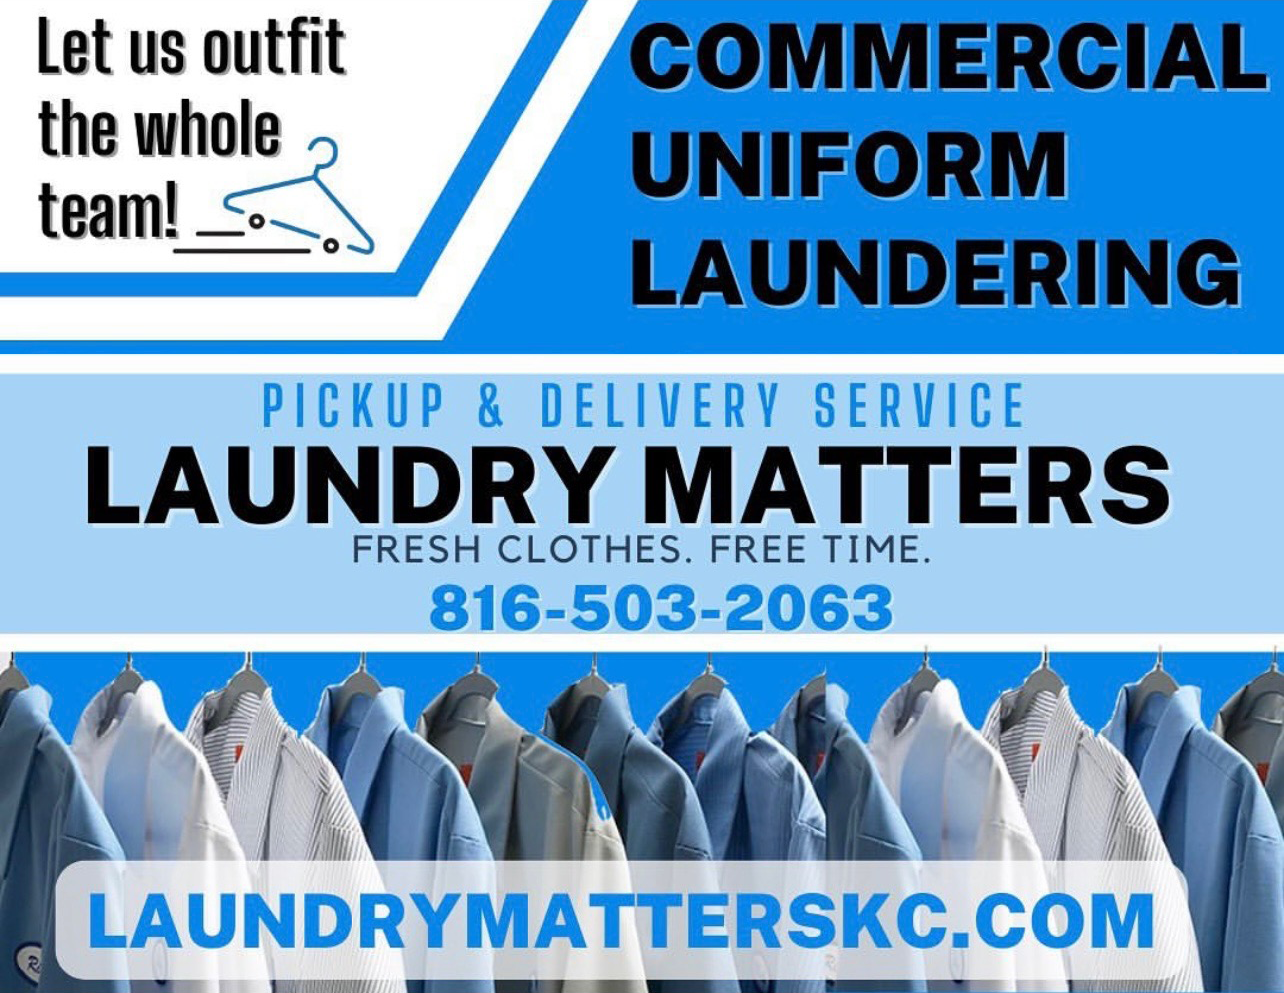 Commercial Uniform Laundering Banner